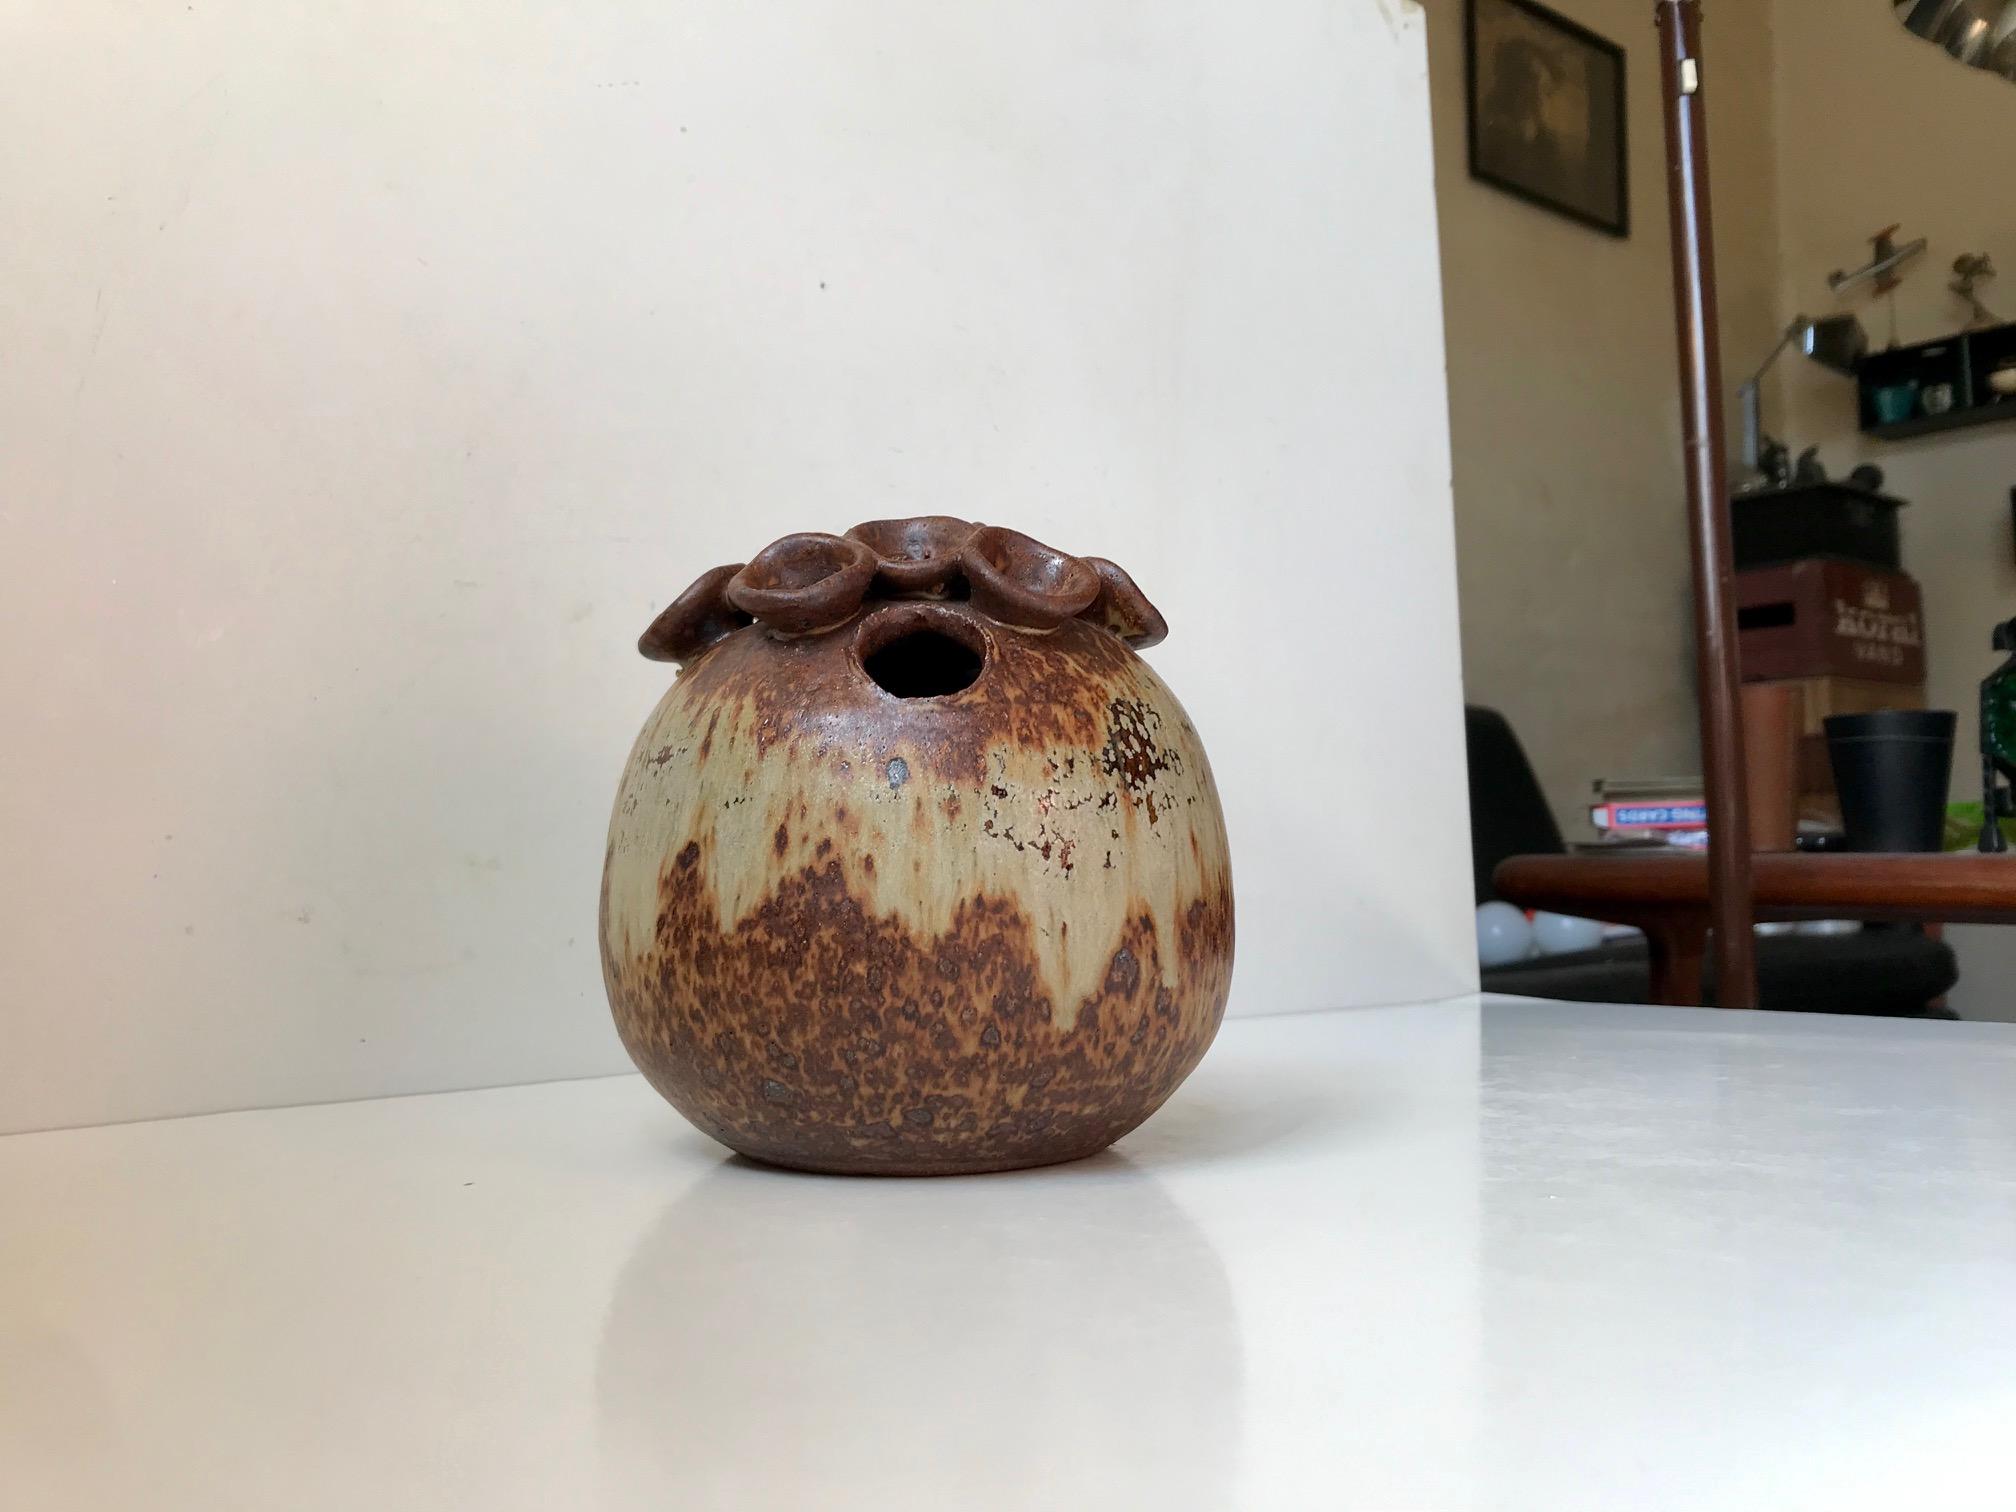 Modern Danish Biomorphic Stoneware Vase by Dorthe Visby, 1990s